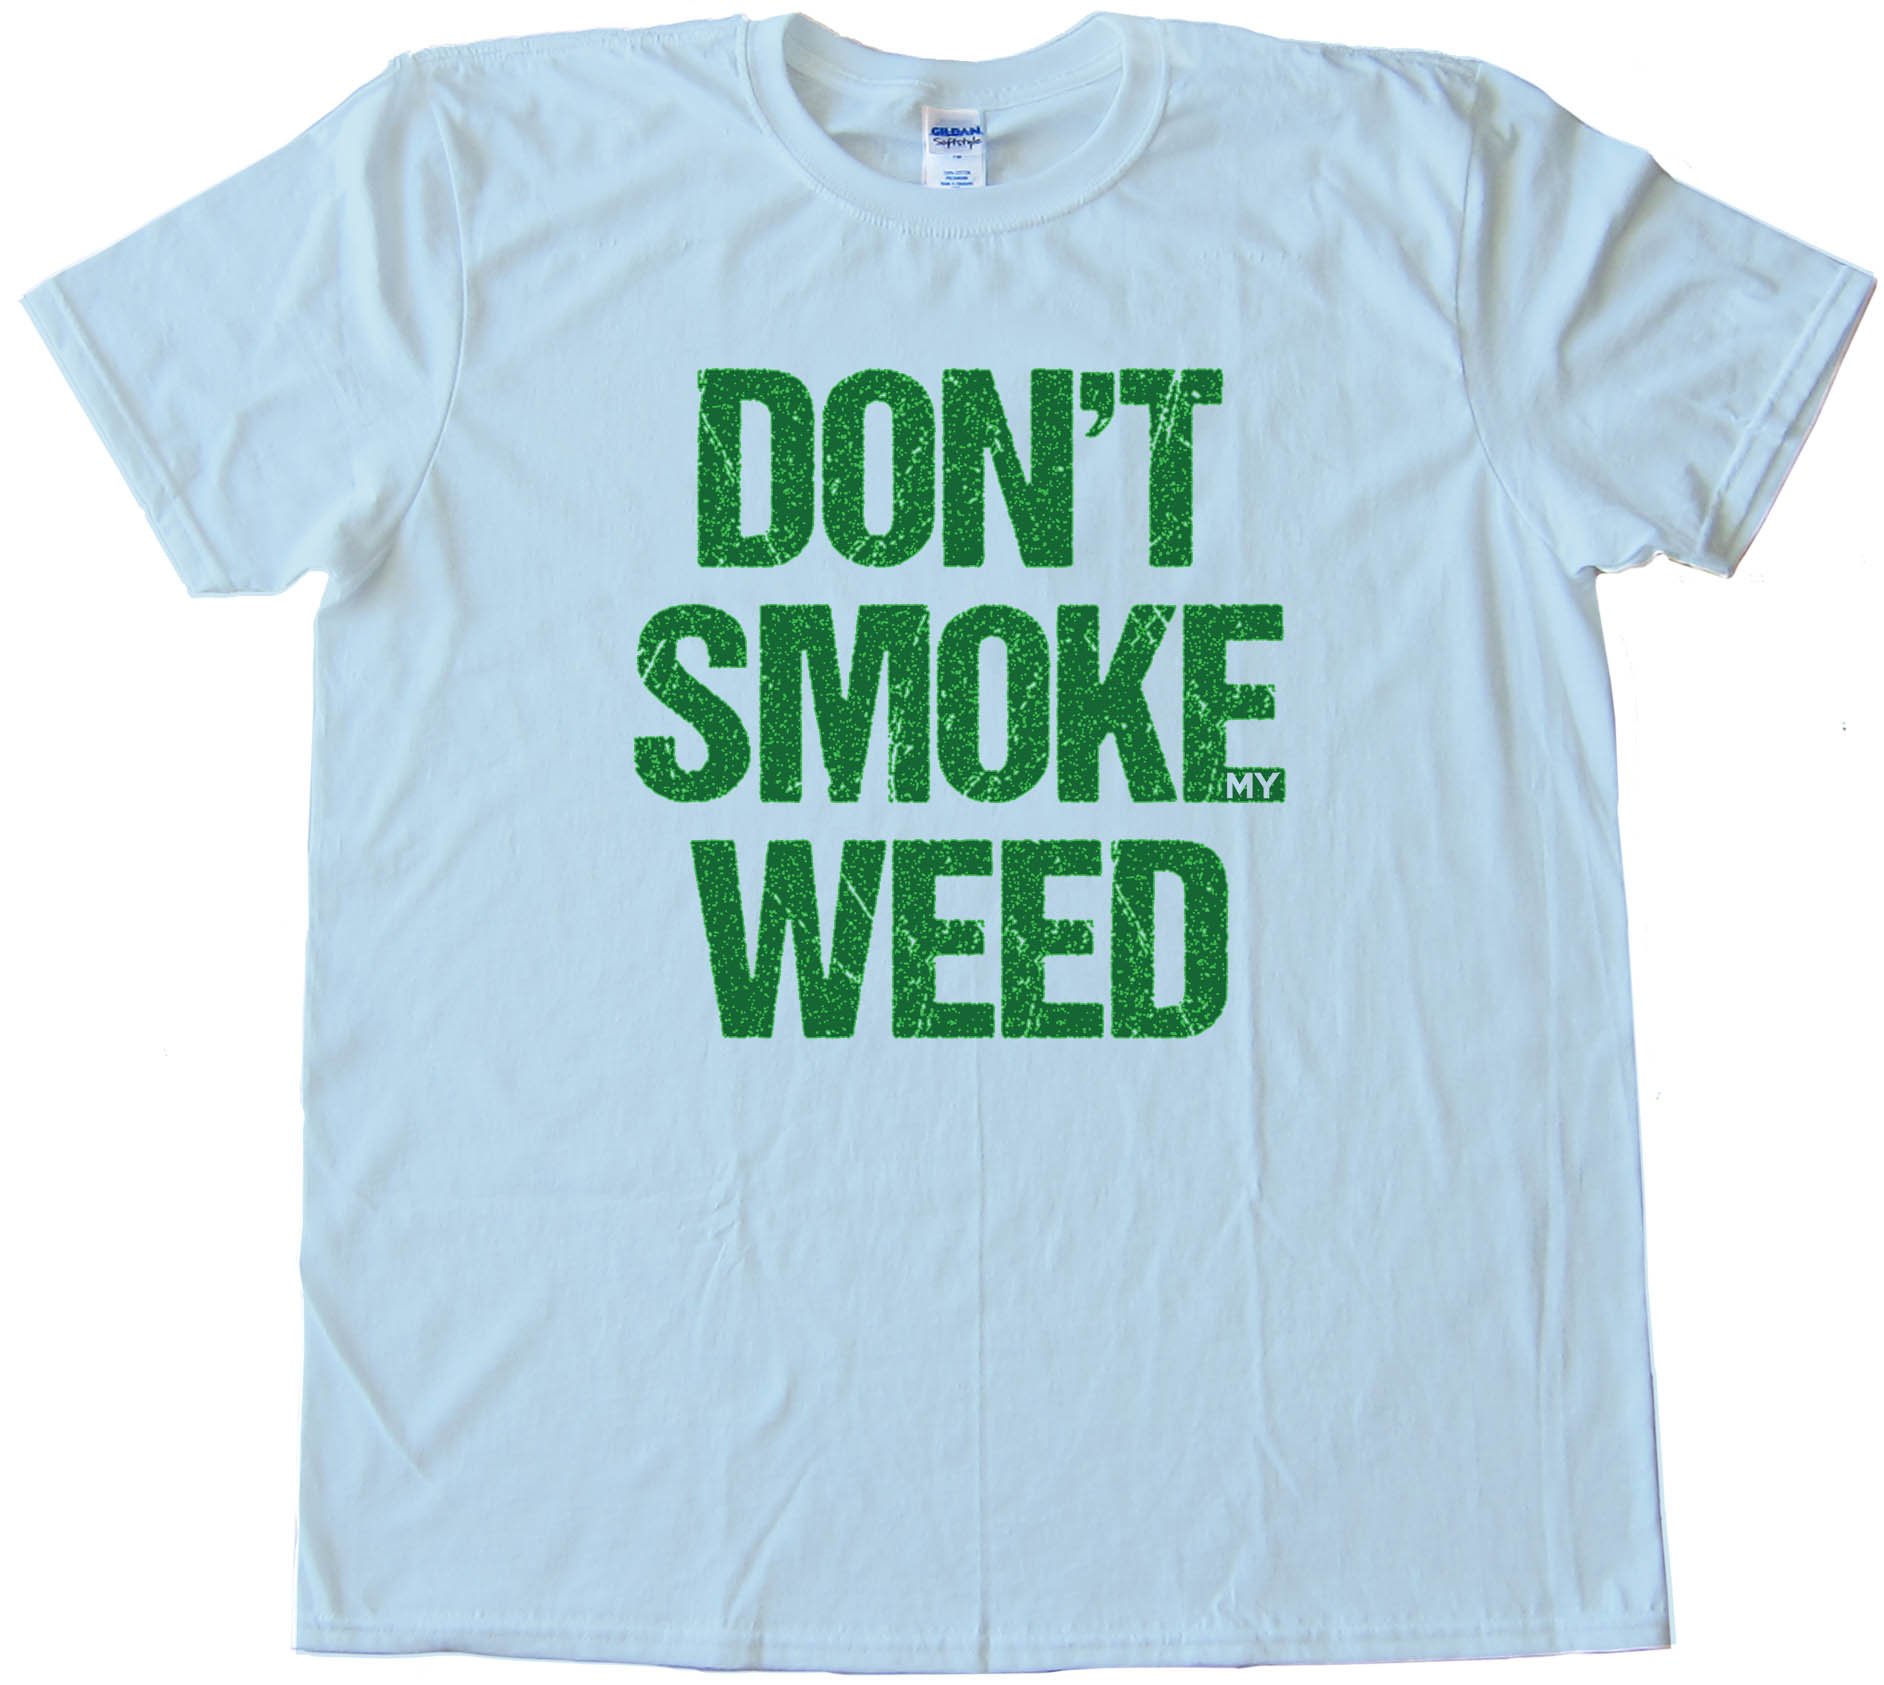 don"t smoke my weed tee shirt